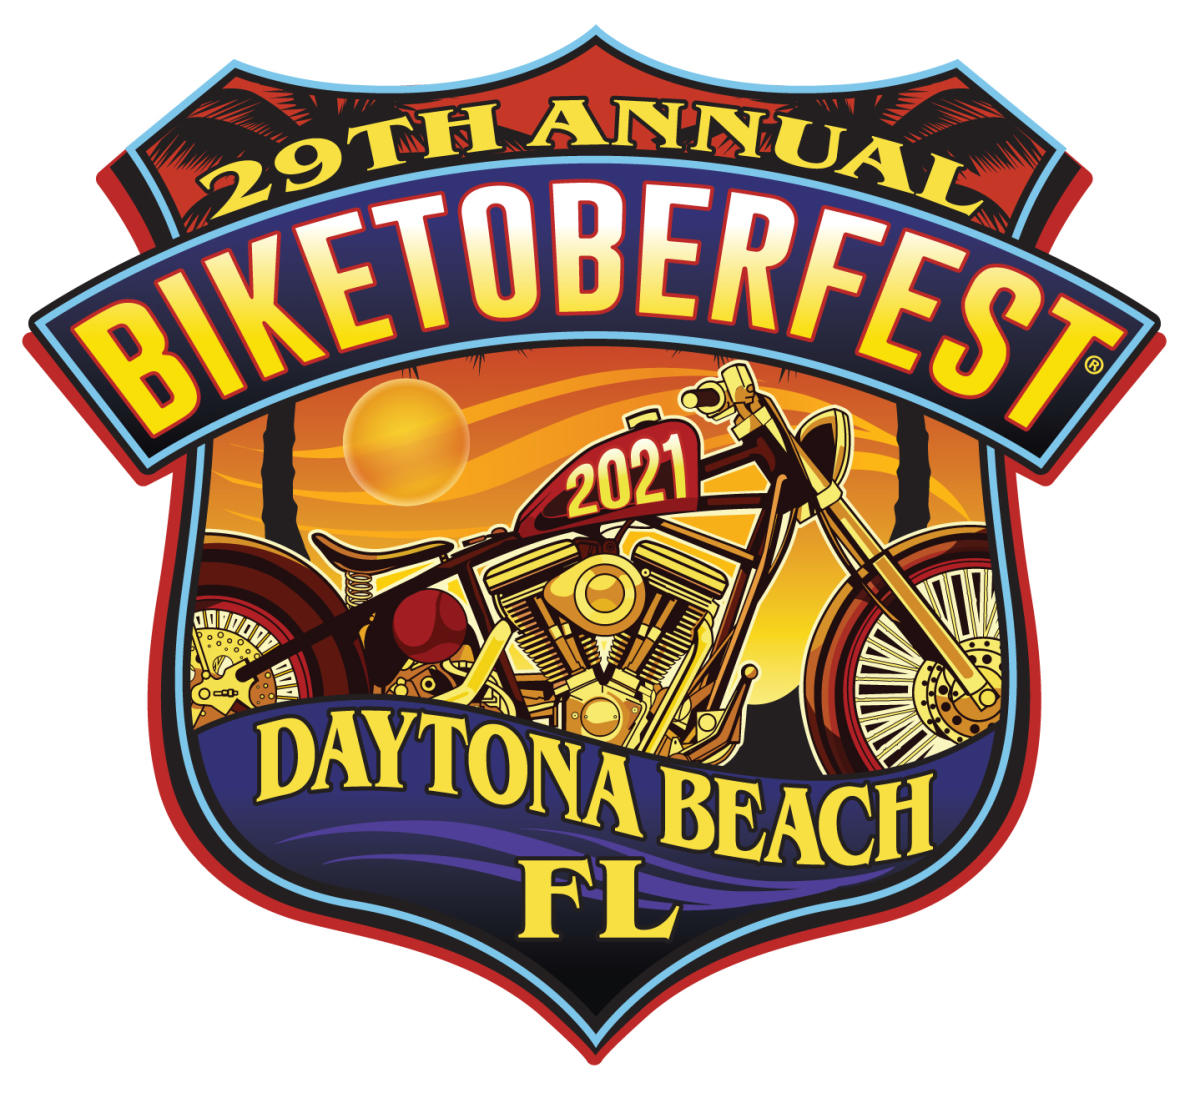 Biketoberfest® Official Pin Daytona Beach, FL